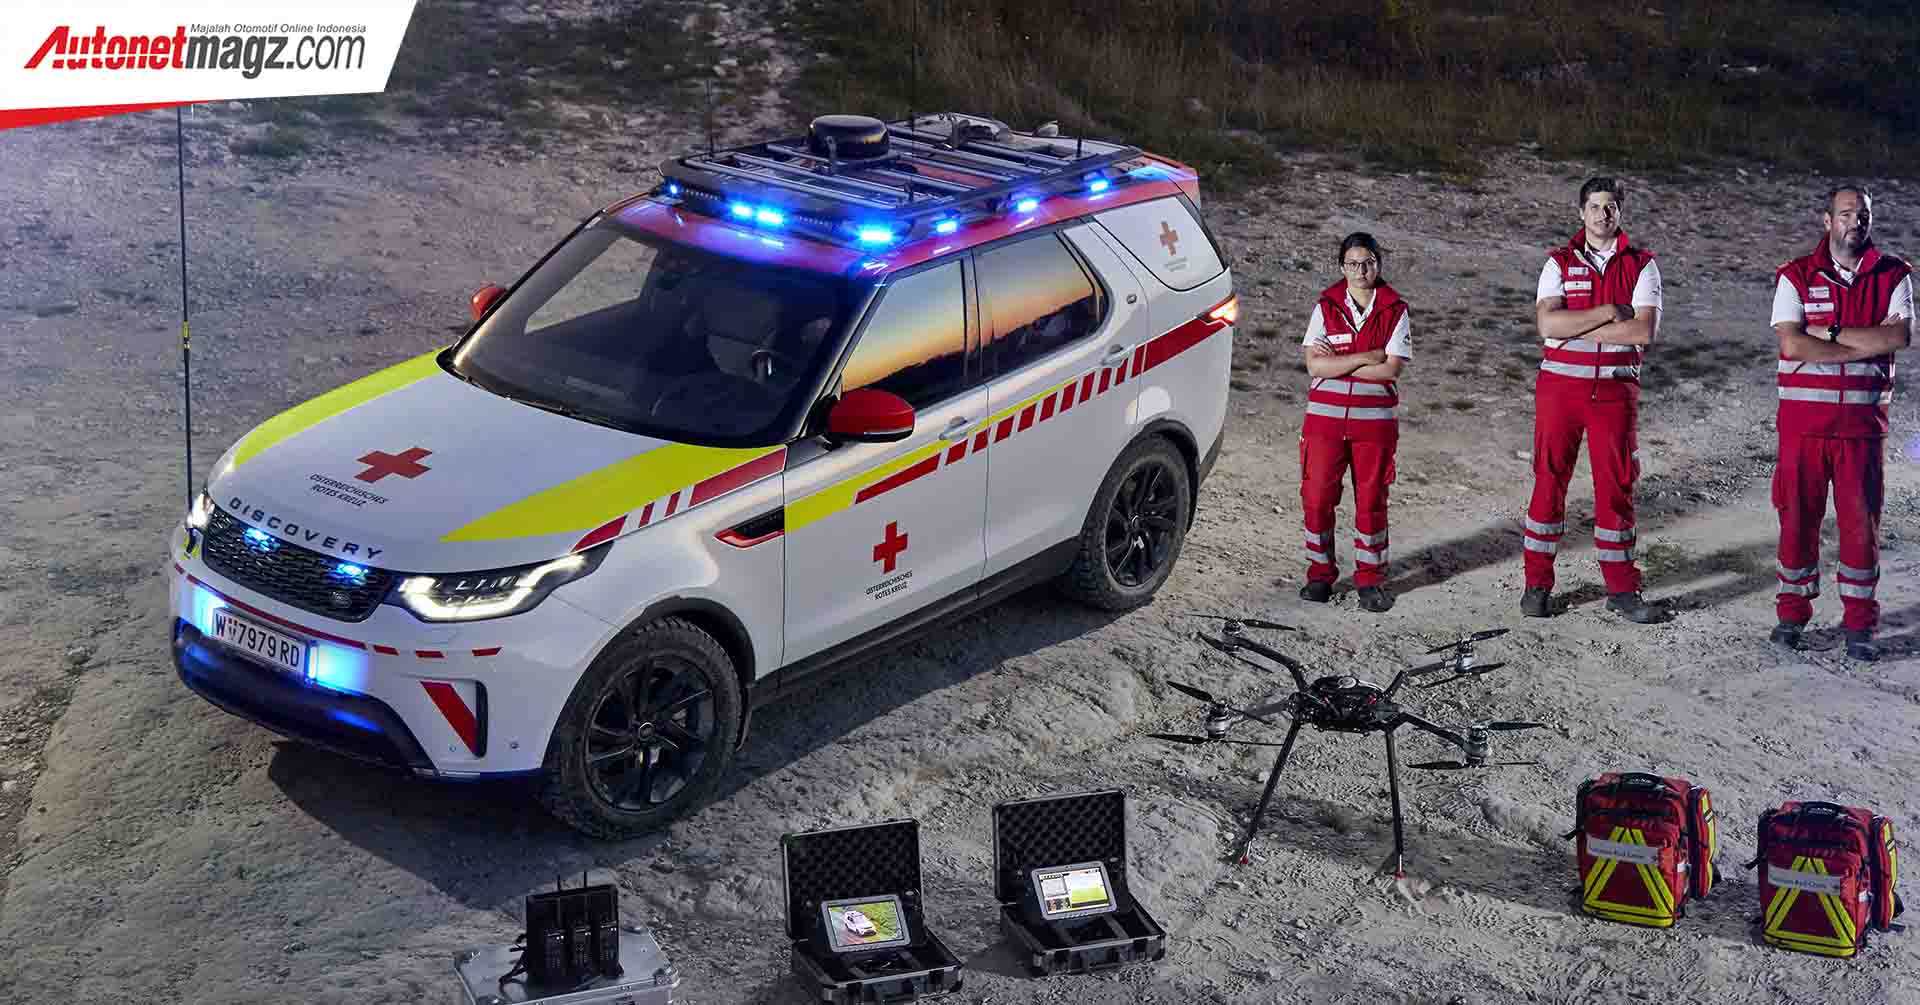 Berita, Petugas di Land Rover Red Cross Discovery: Land Rover Memperkenalkan Discovery Edisi Khusus Palang Merah